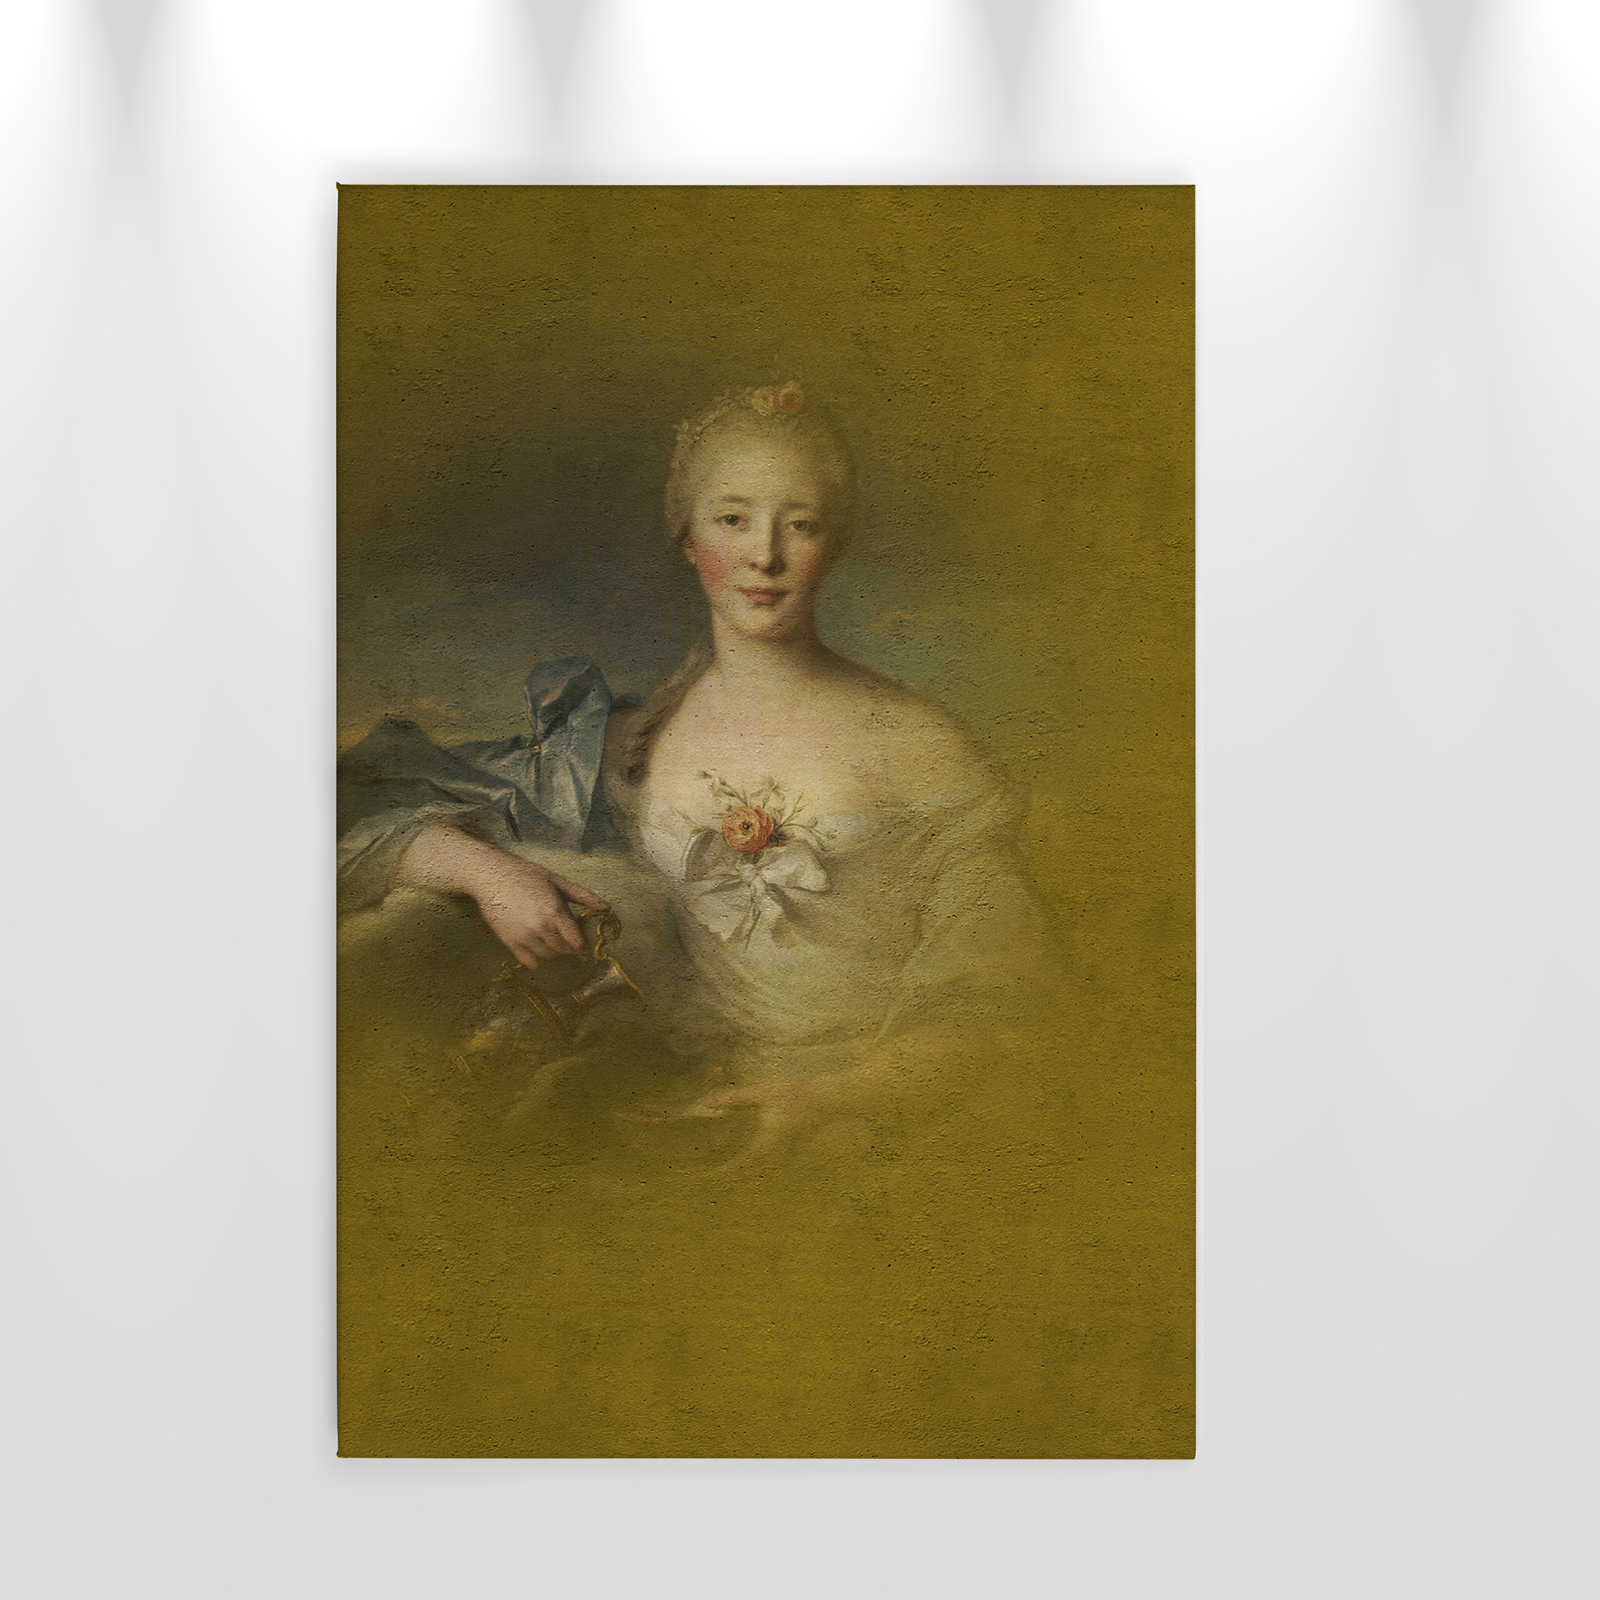             Cuadro lienzo retrato clásico joven dama - 0,60 m x 0,90 m
        